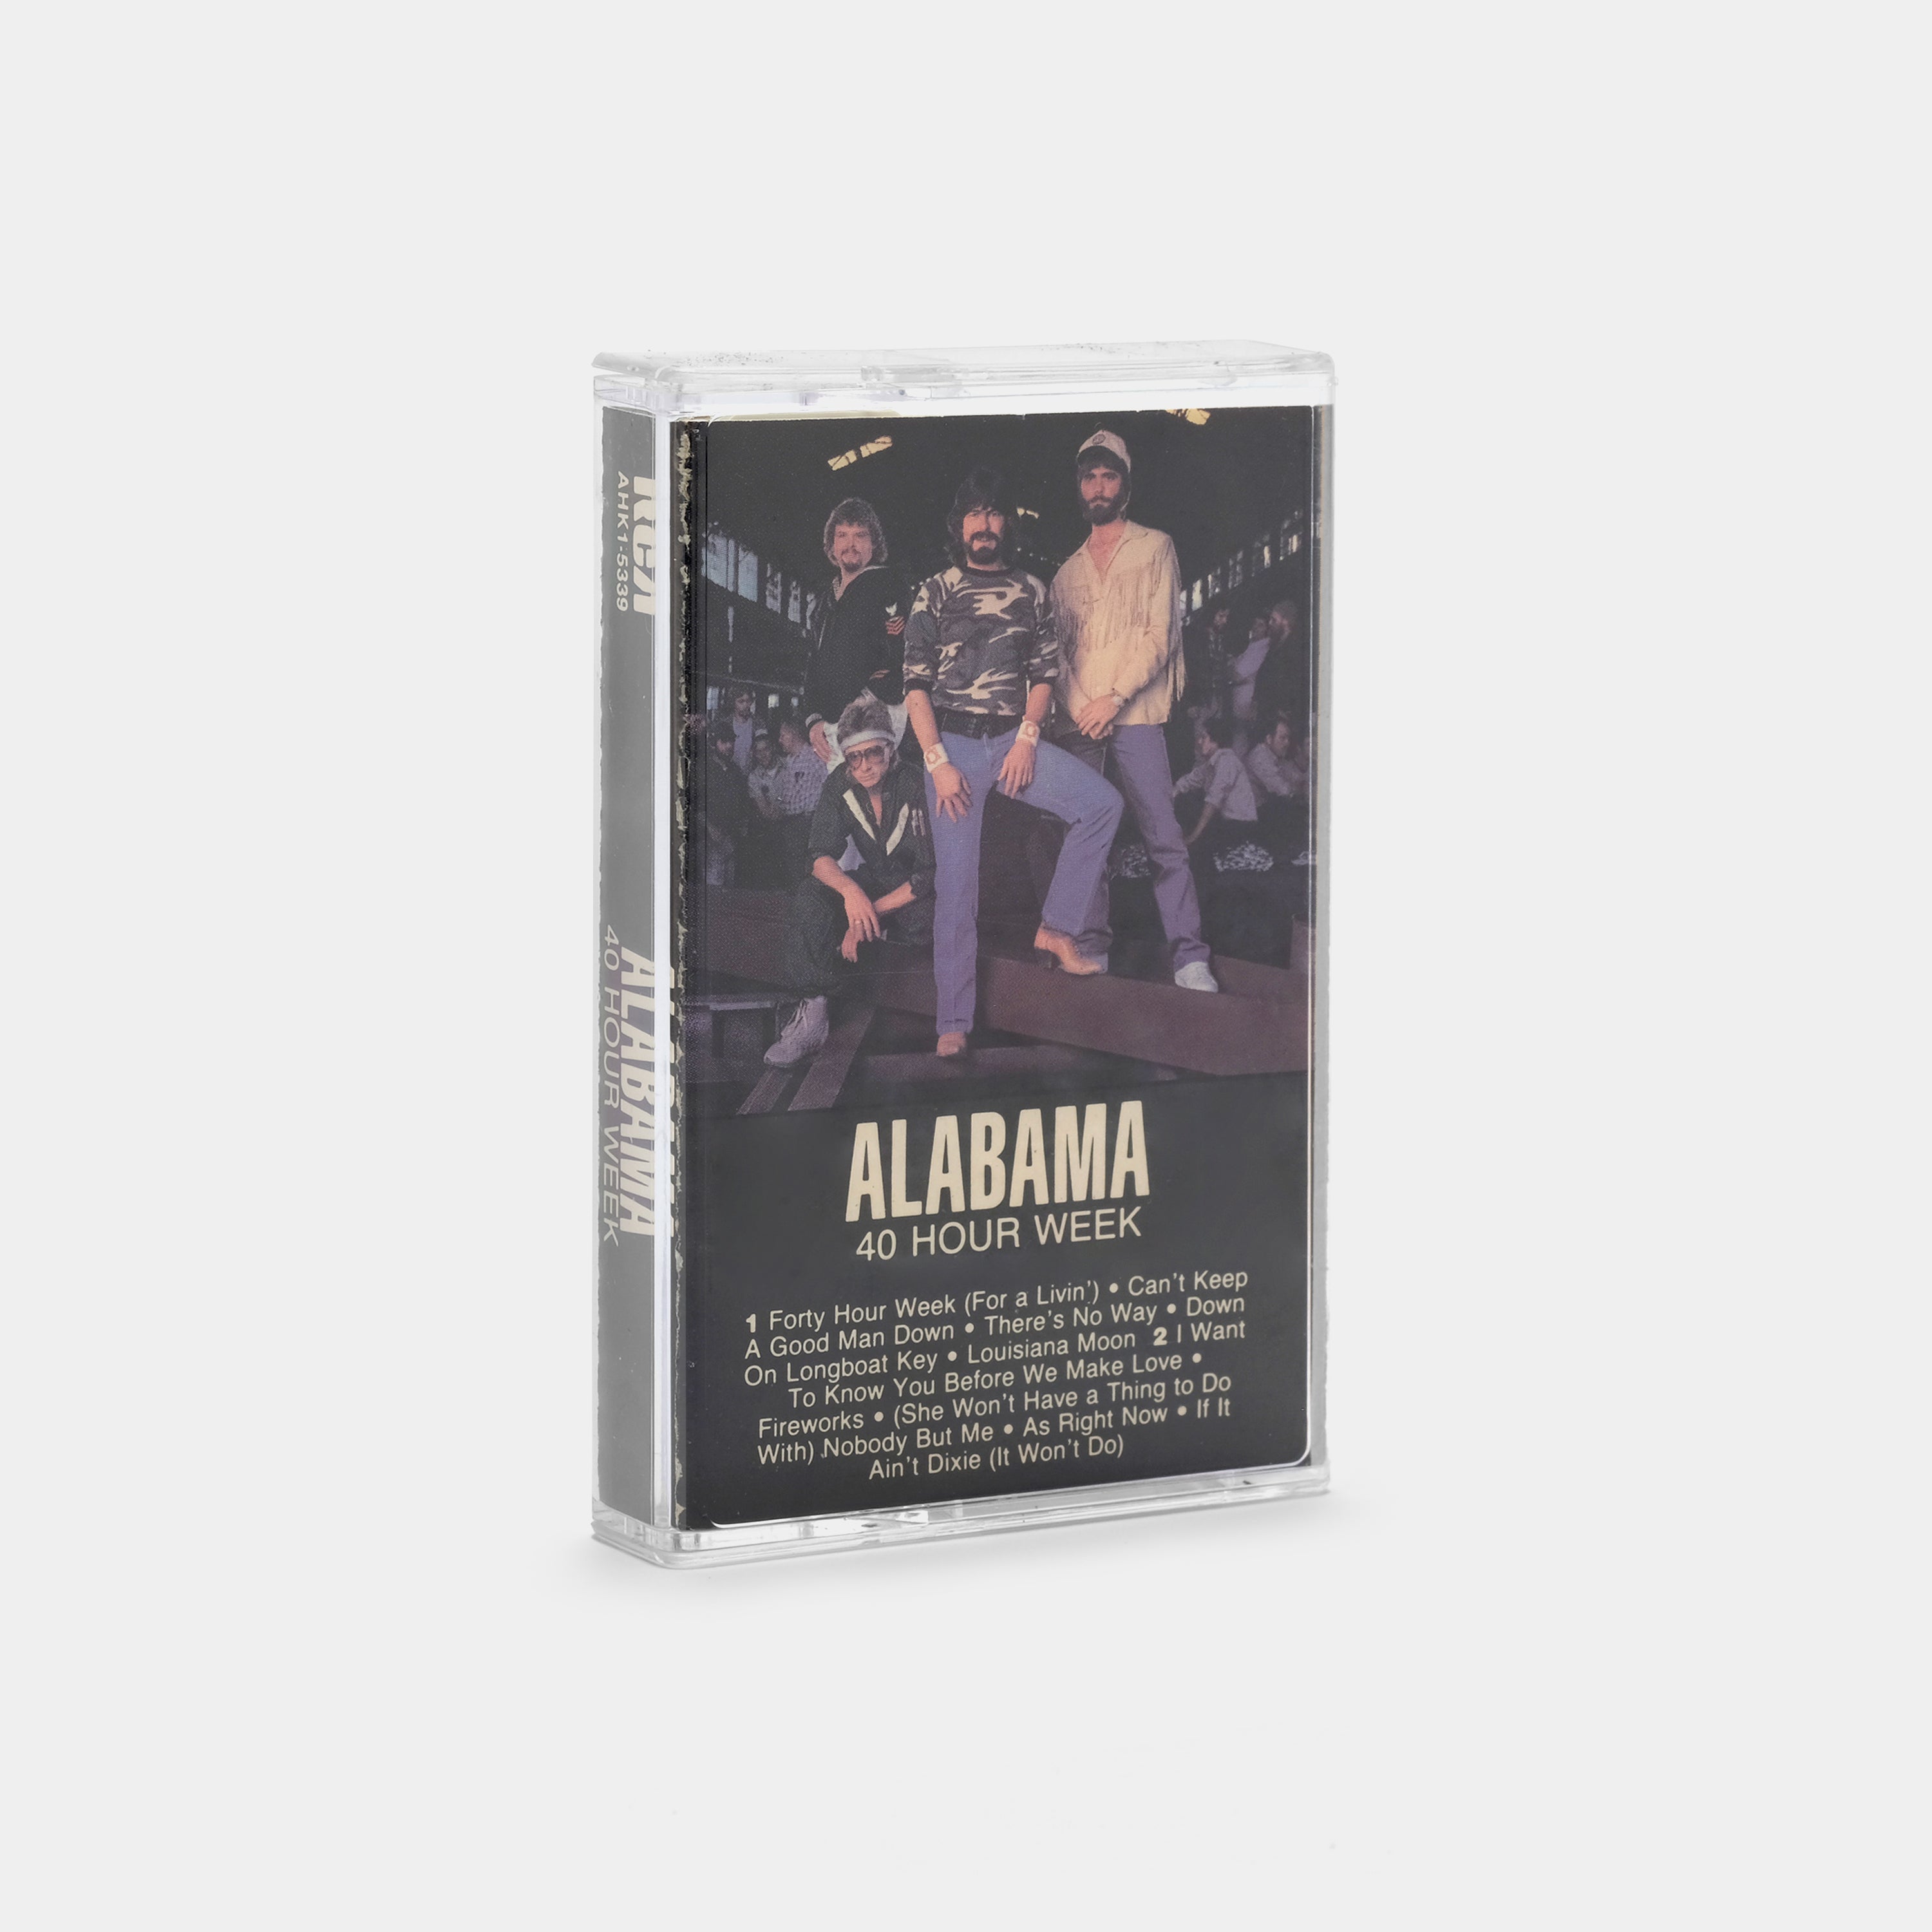 Alabama - 40 Hour Week Cassette Tape